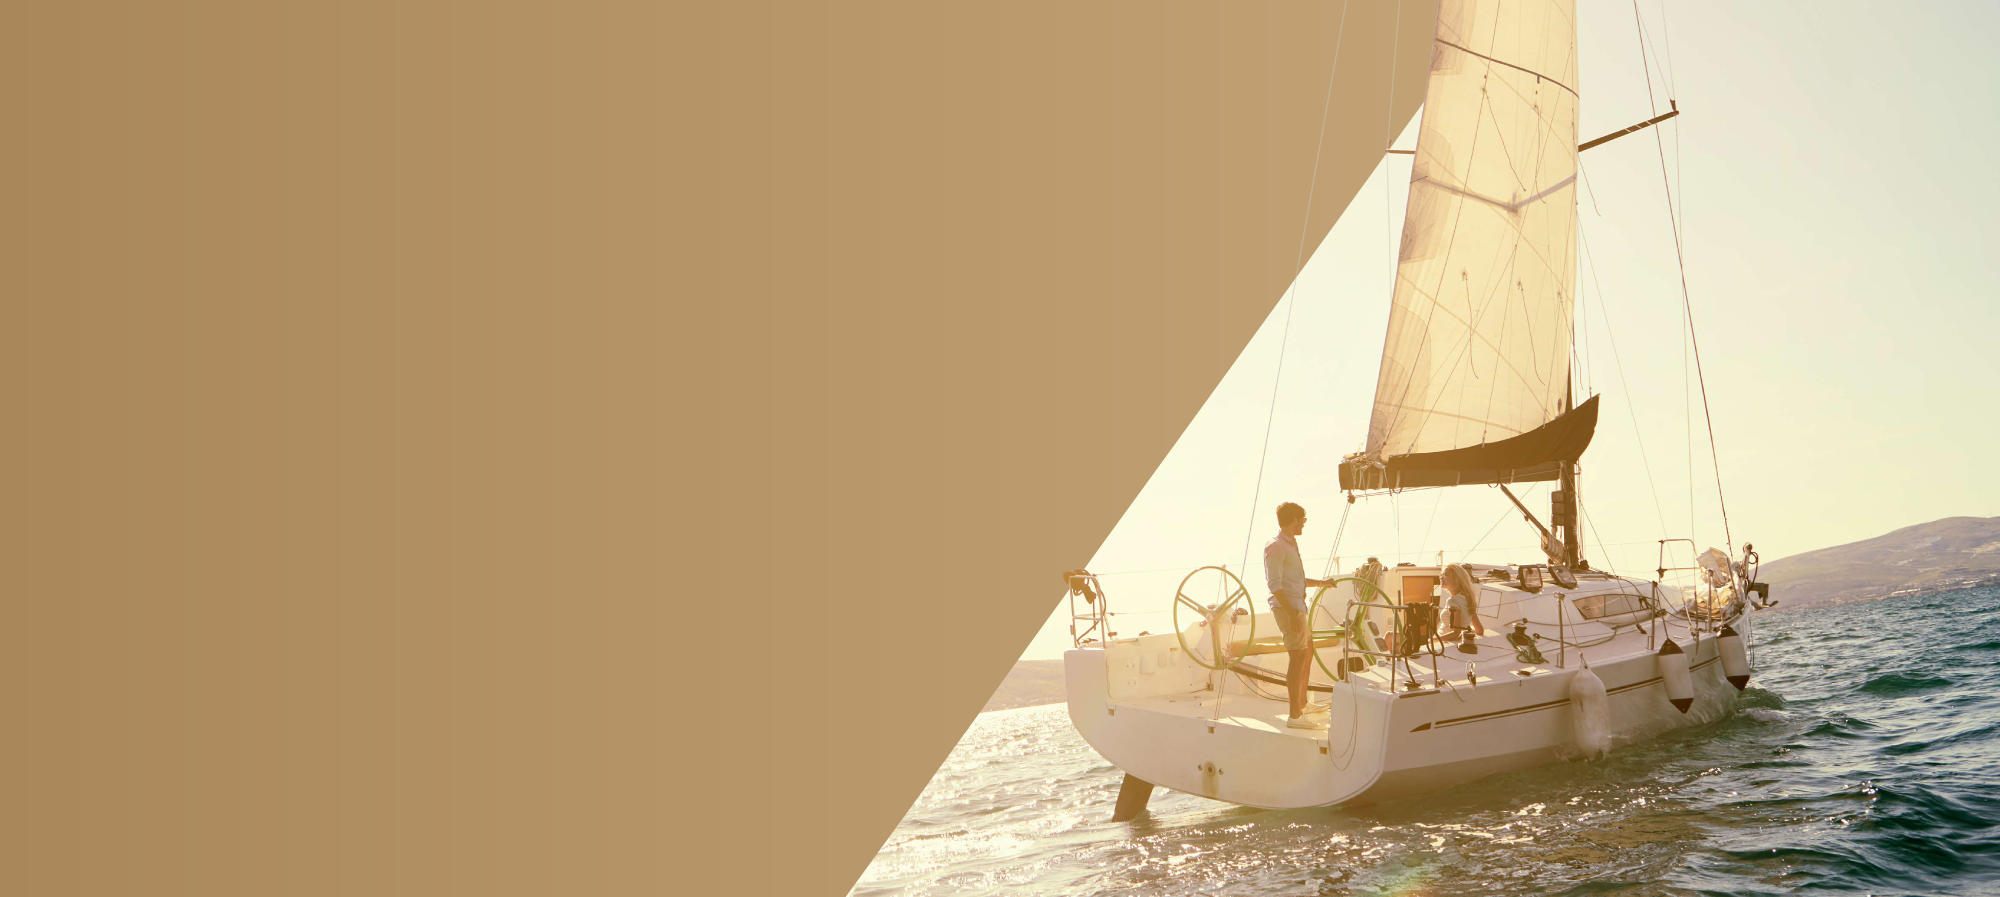 Sailing towards an affluent retirement